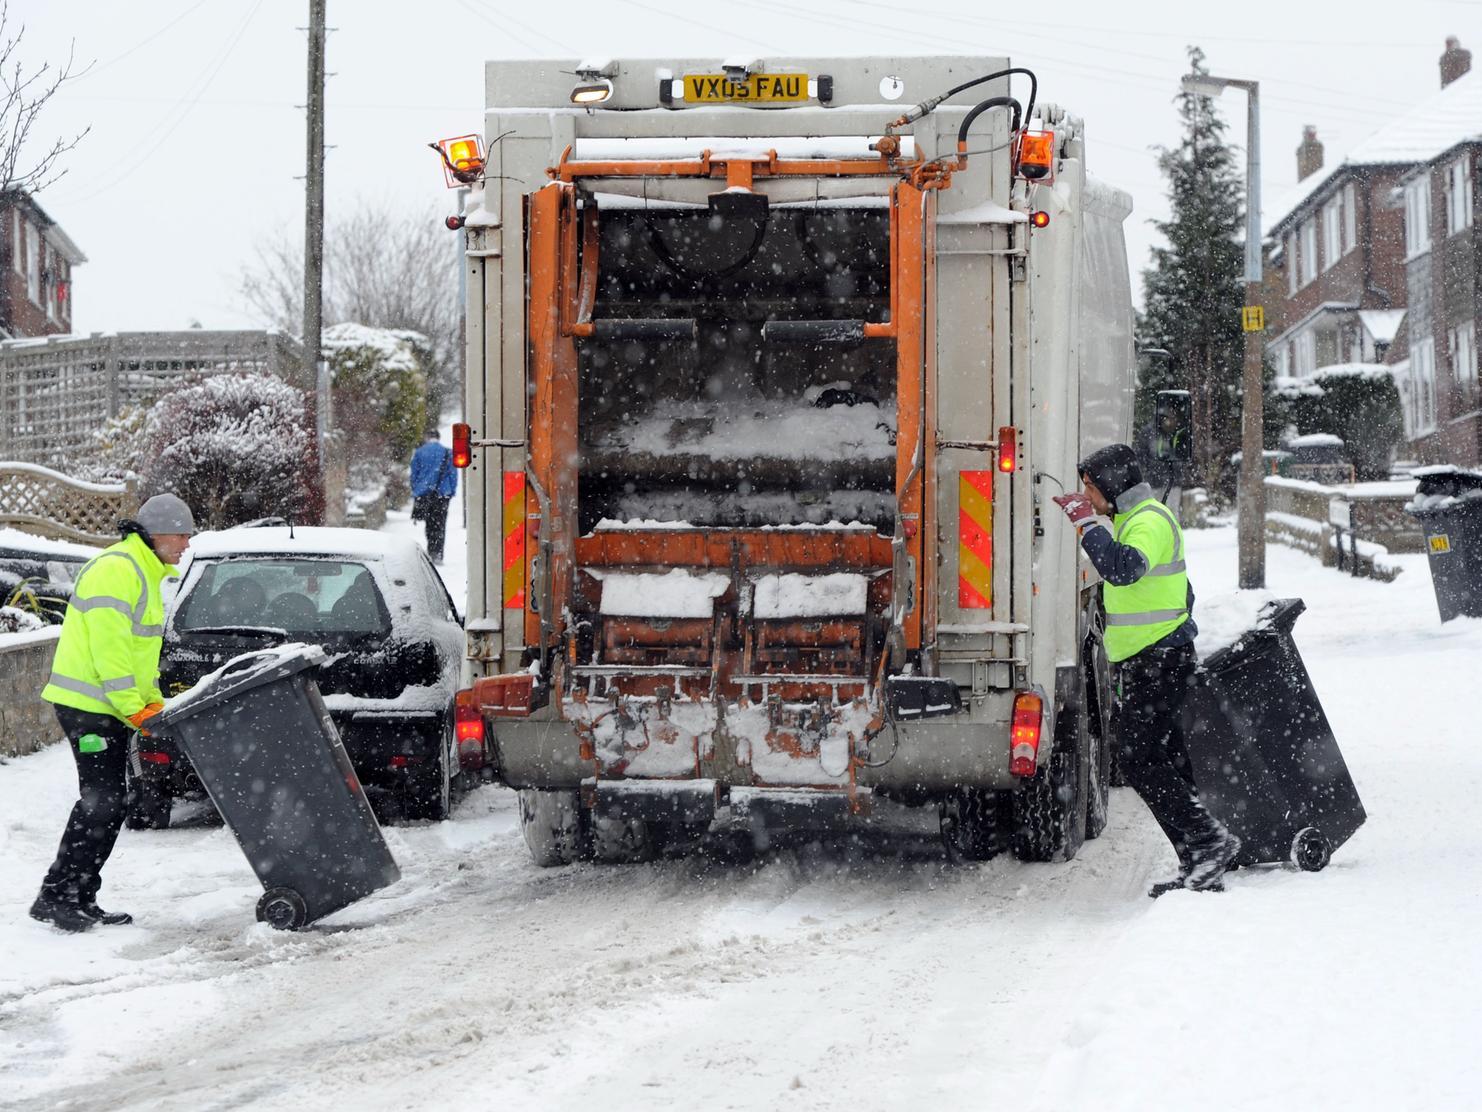 Bin men get their work done despite the snow covered roads in Mirfield.